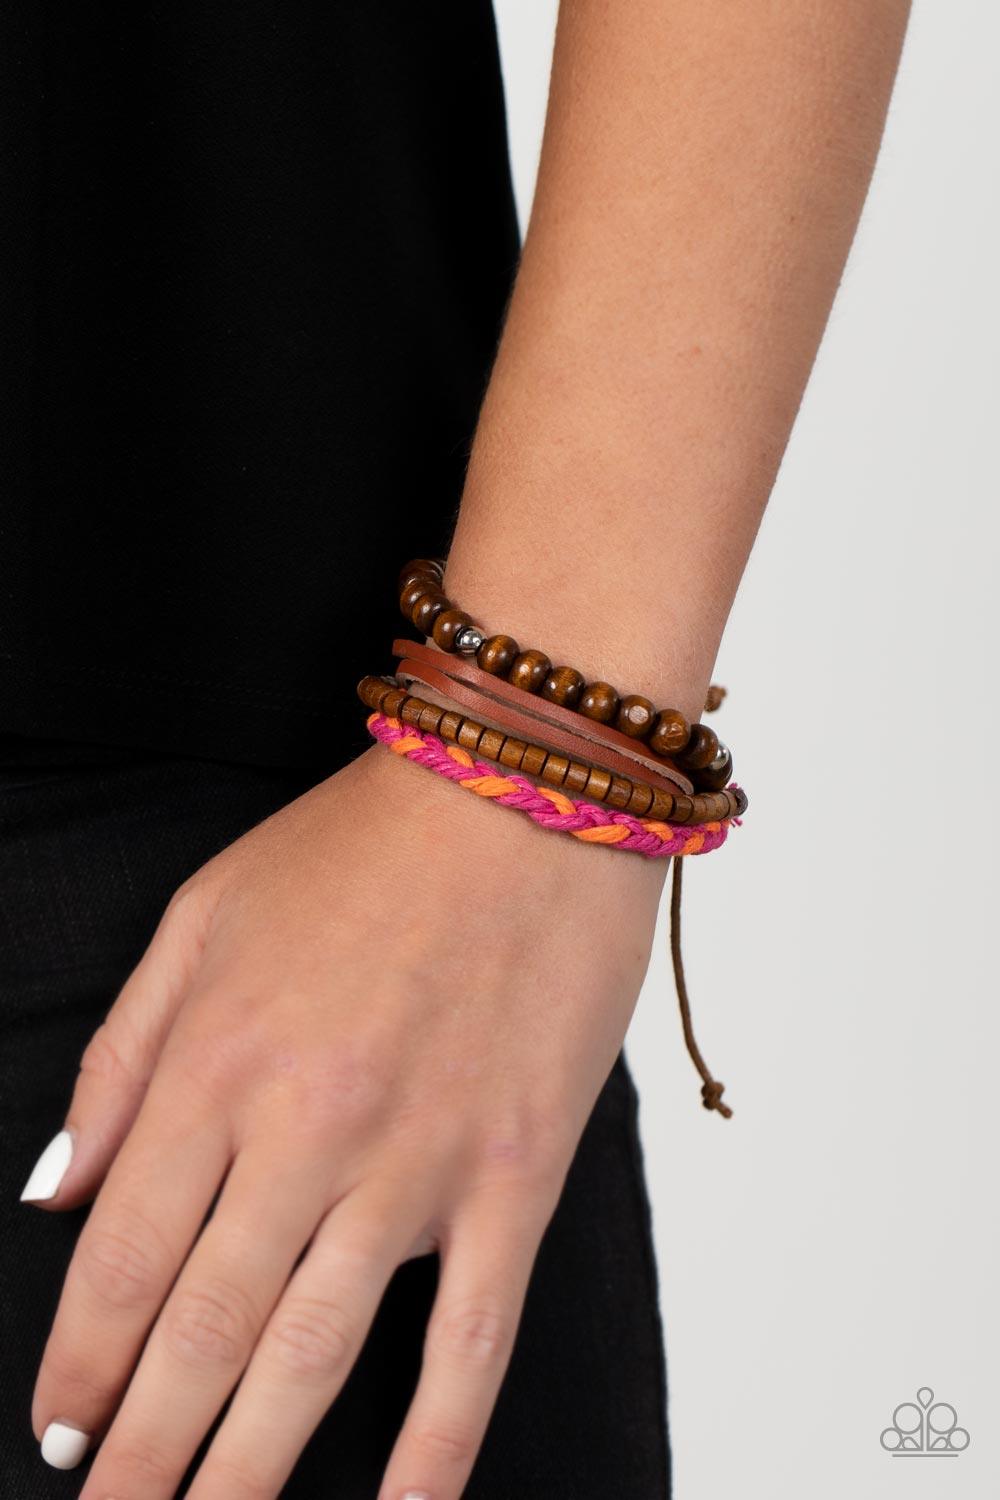 Timberland Trendsetter Pink Bracelet - Jewelry by Bretta